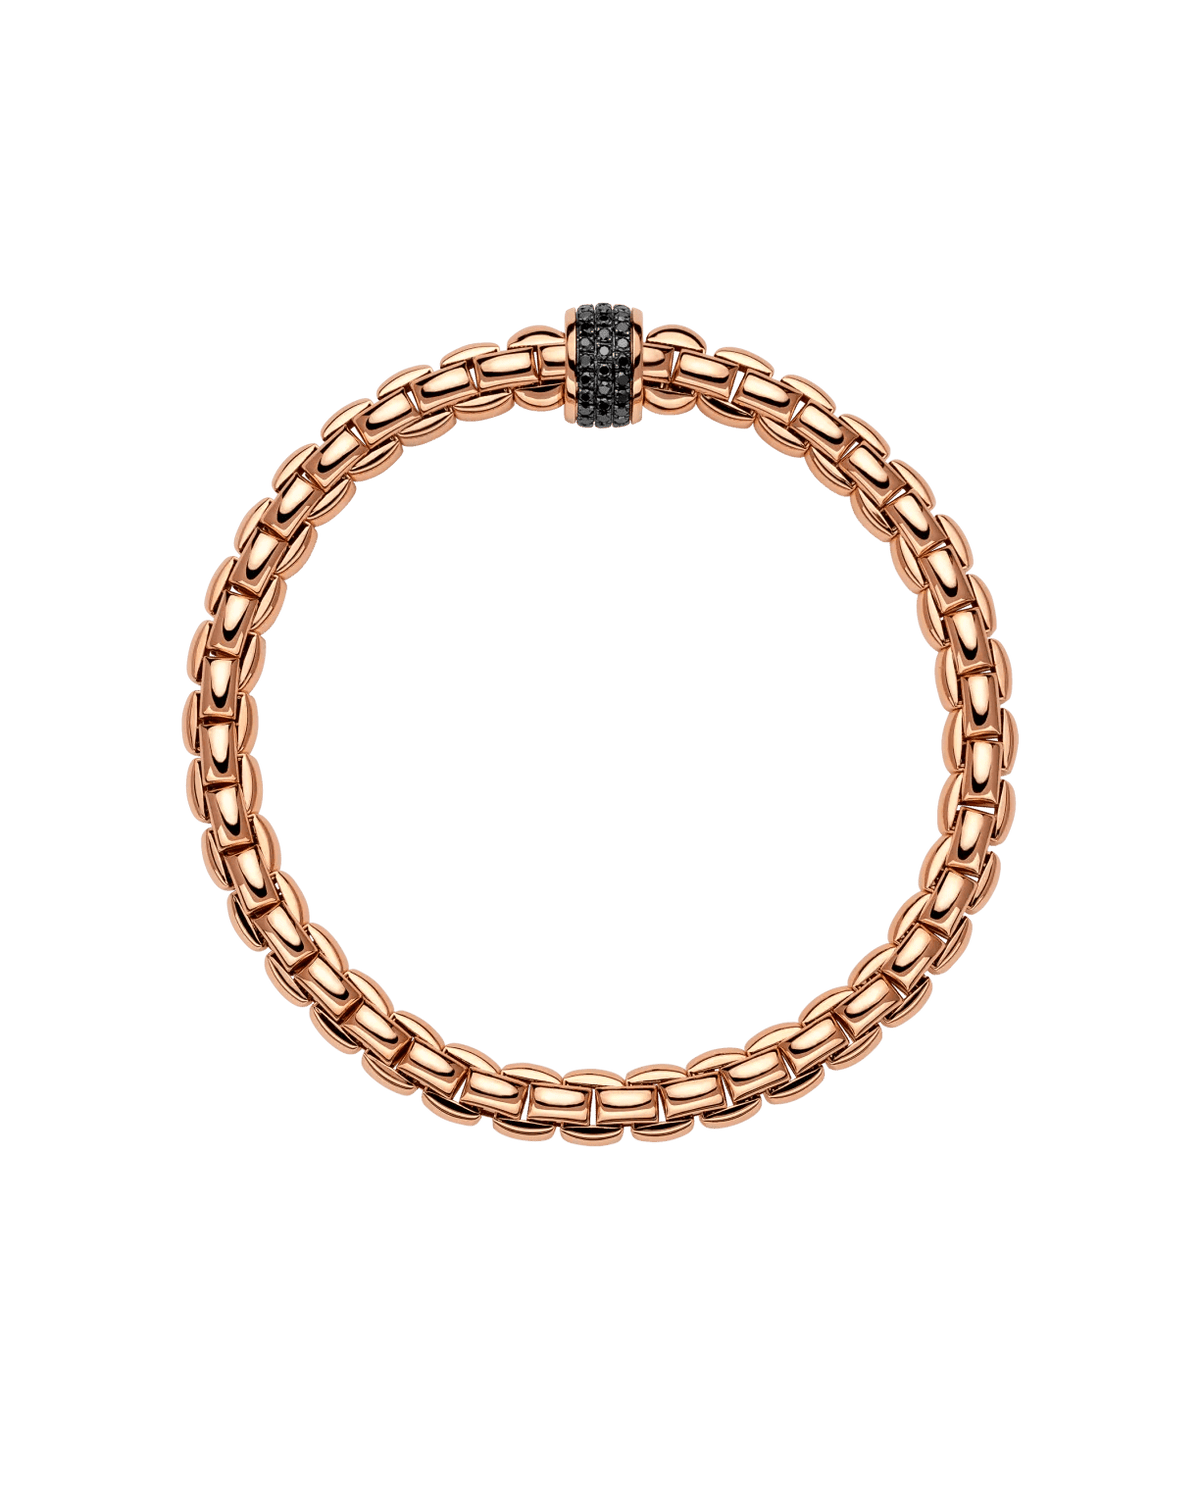 Flex’It Bracelet in Rose Gold with Black Diamonds - Aurum Jewels